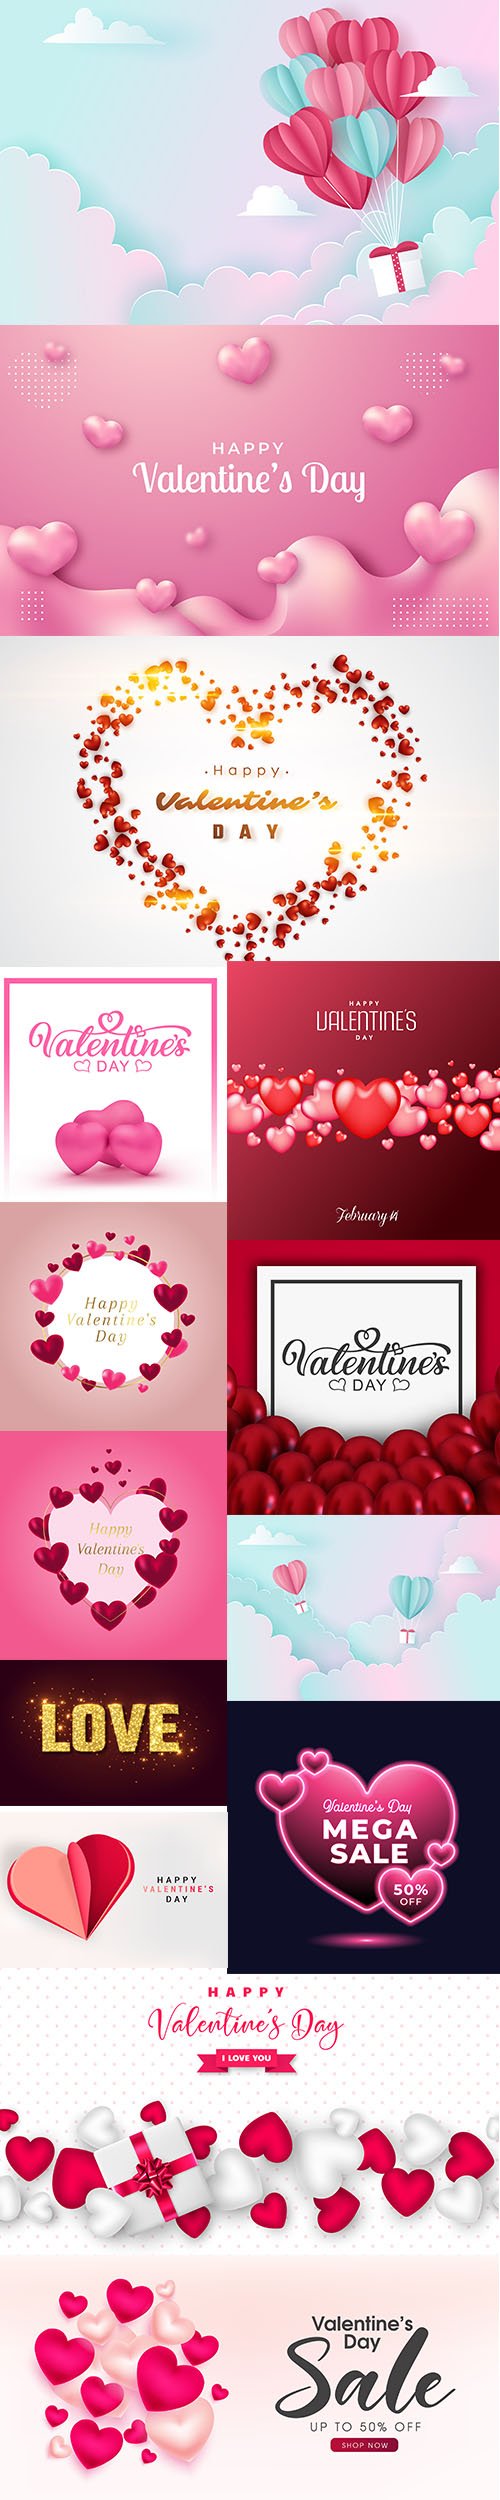 Set of Romantic Valentines Day Illustrations